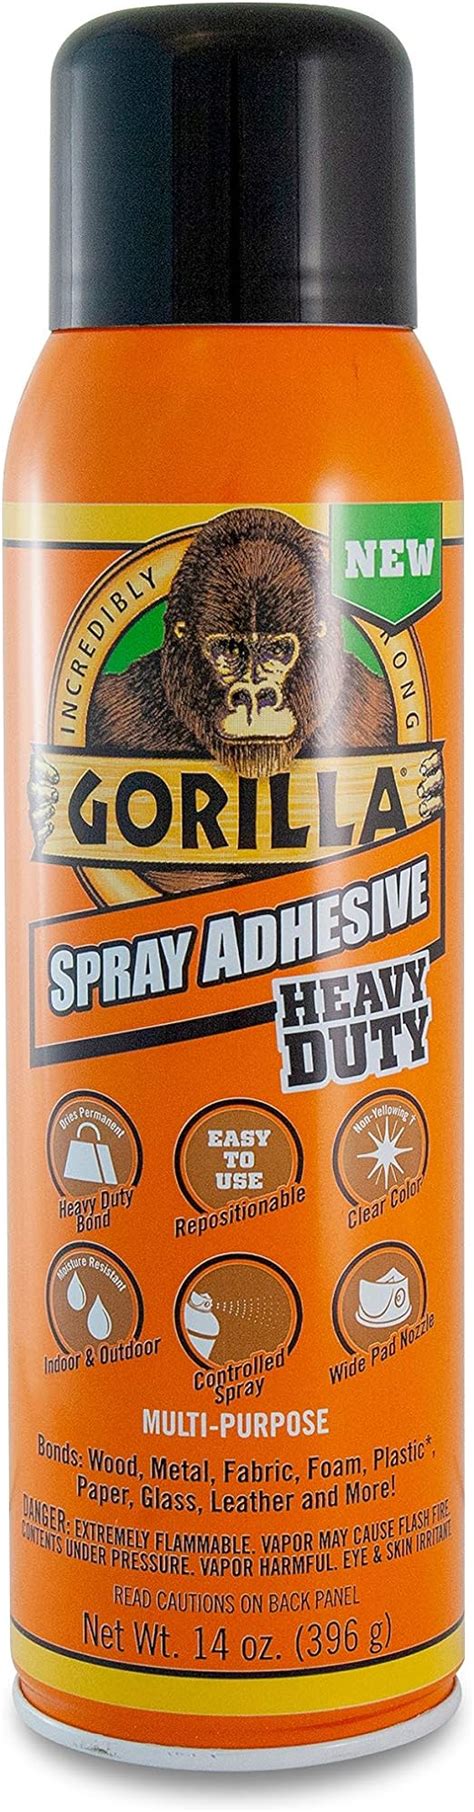 Gorilla Heavy Duty Spray Adhesive Multipurpose And Repositionable 14